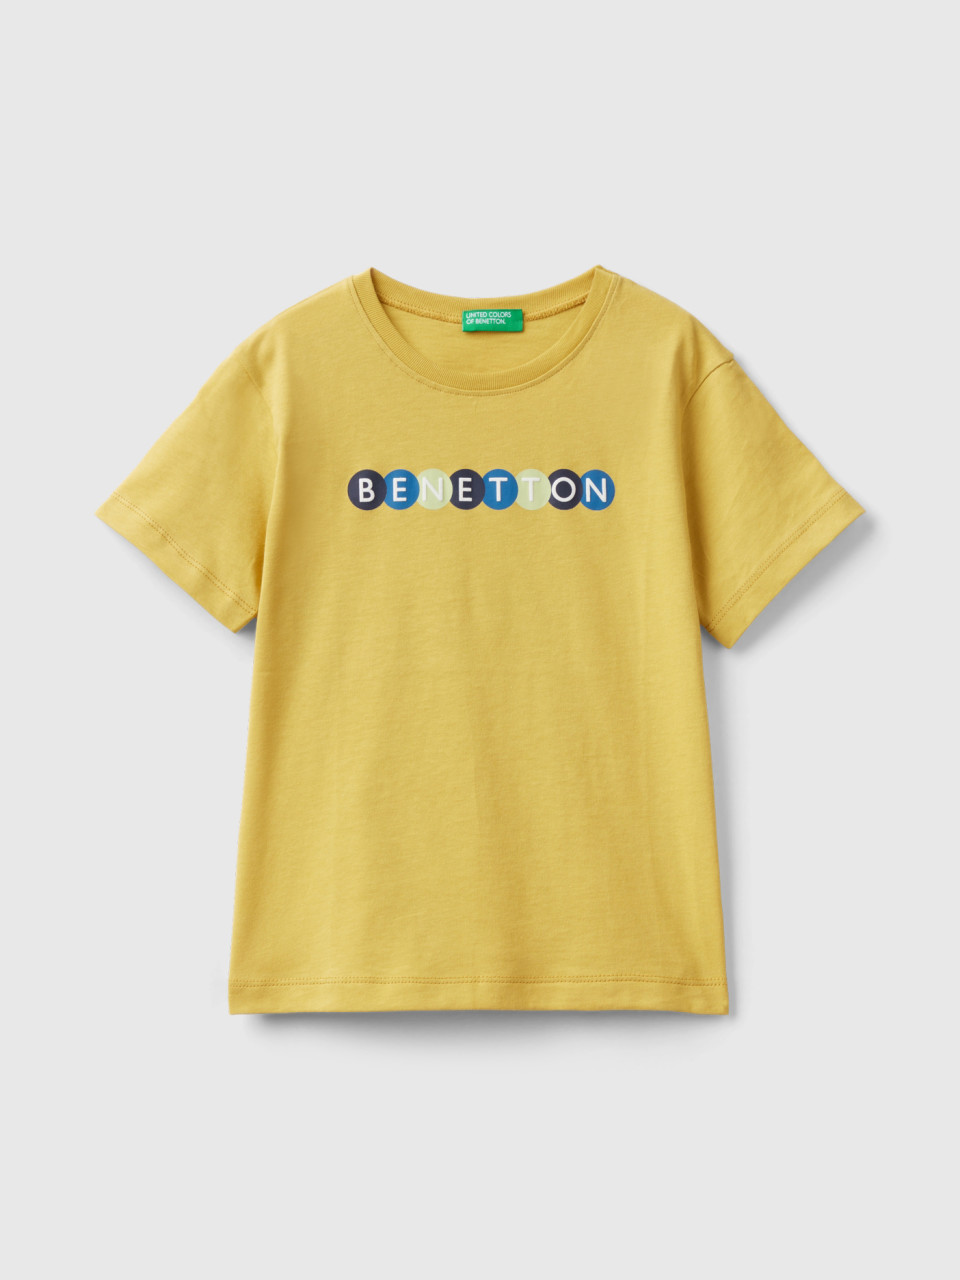 Benetton, T-shirt With Print In 100% Organic Cotton, Mustard, Kids